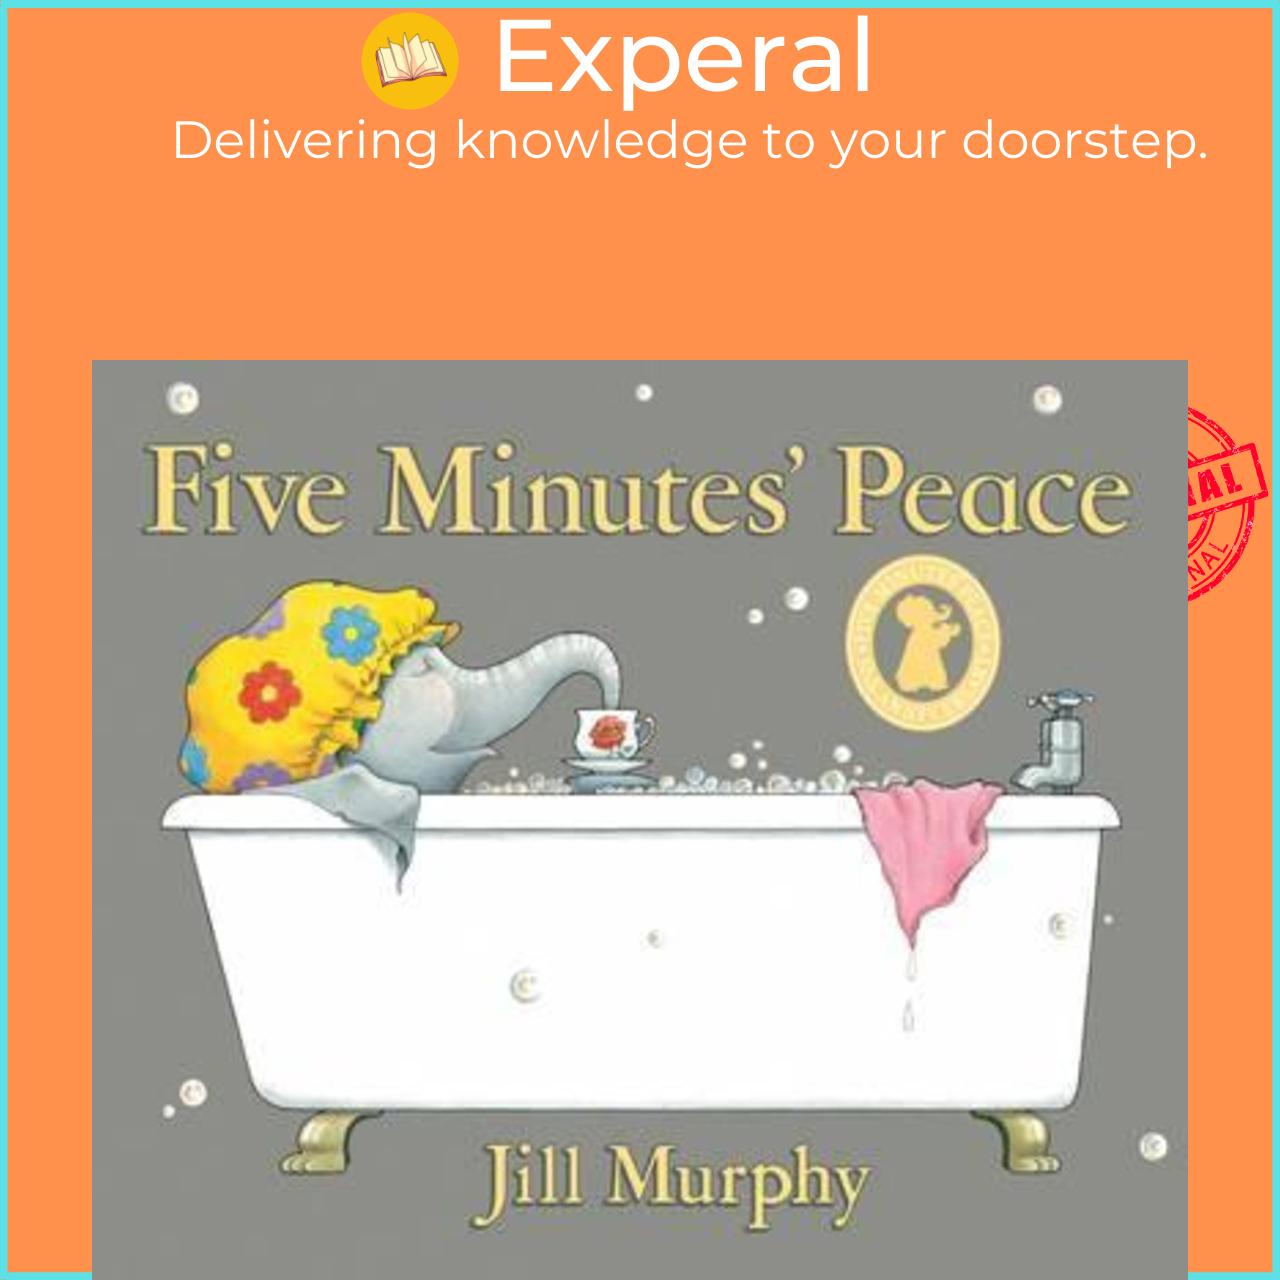 Sách - Five Minutes' Peace by Jill Murphy (UK edition, paperback)